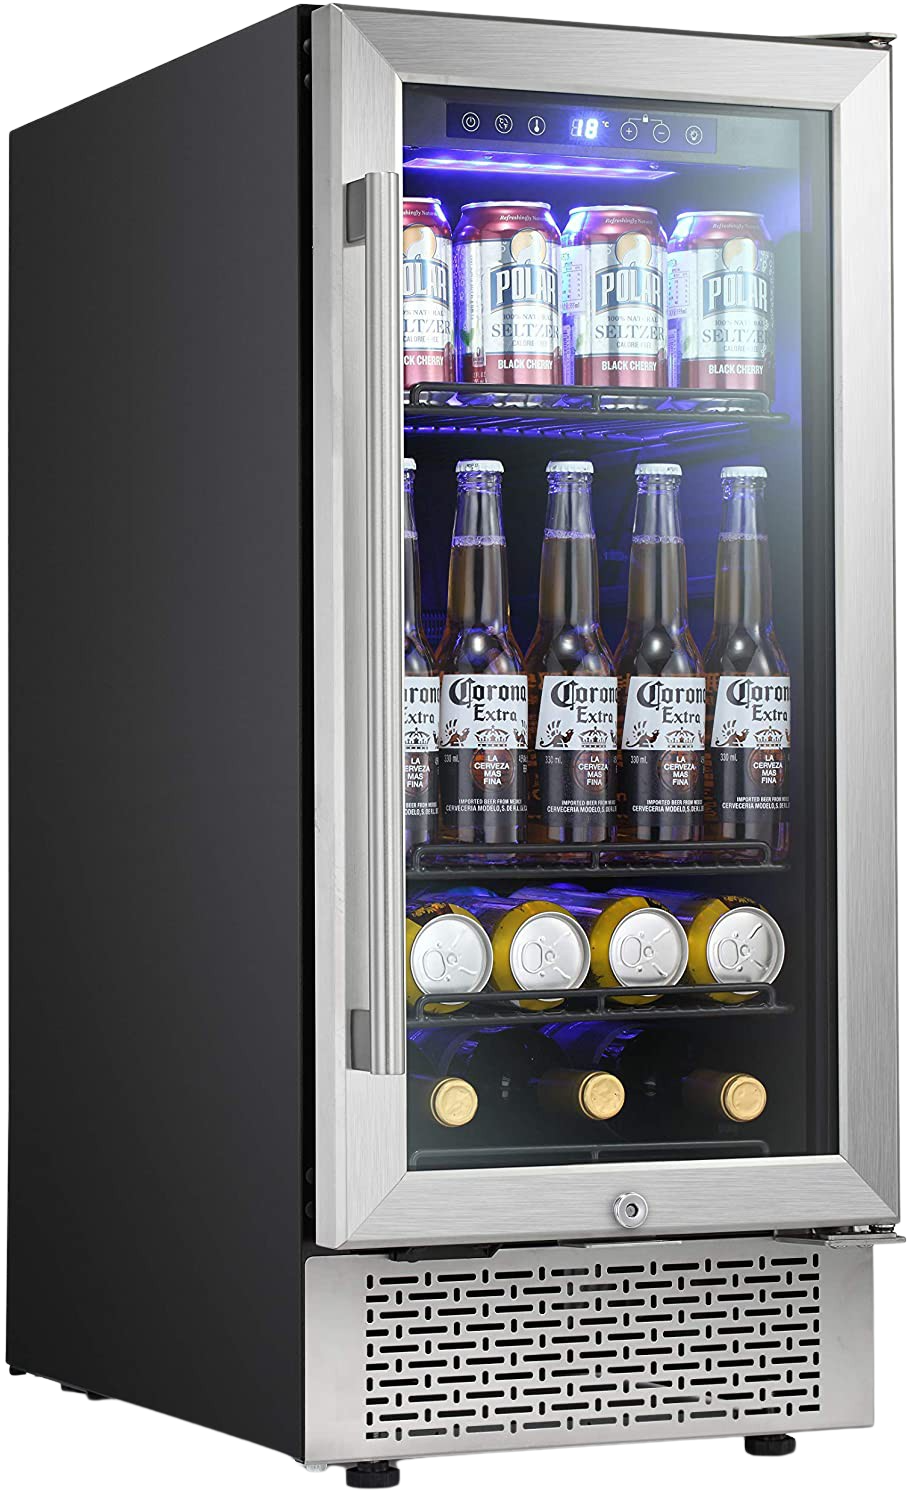 Antarctic Star, Antarctic Star W74C 15 Inch Beverage Refrigerator with Digital Memory Temperature Control New